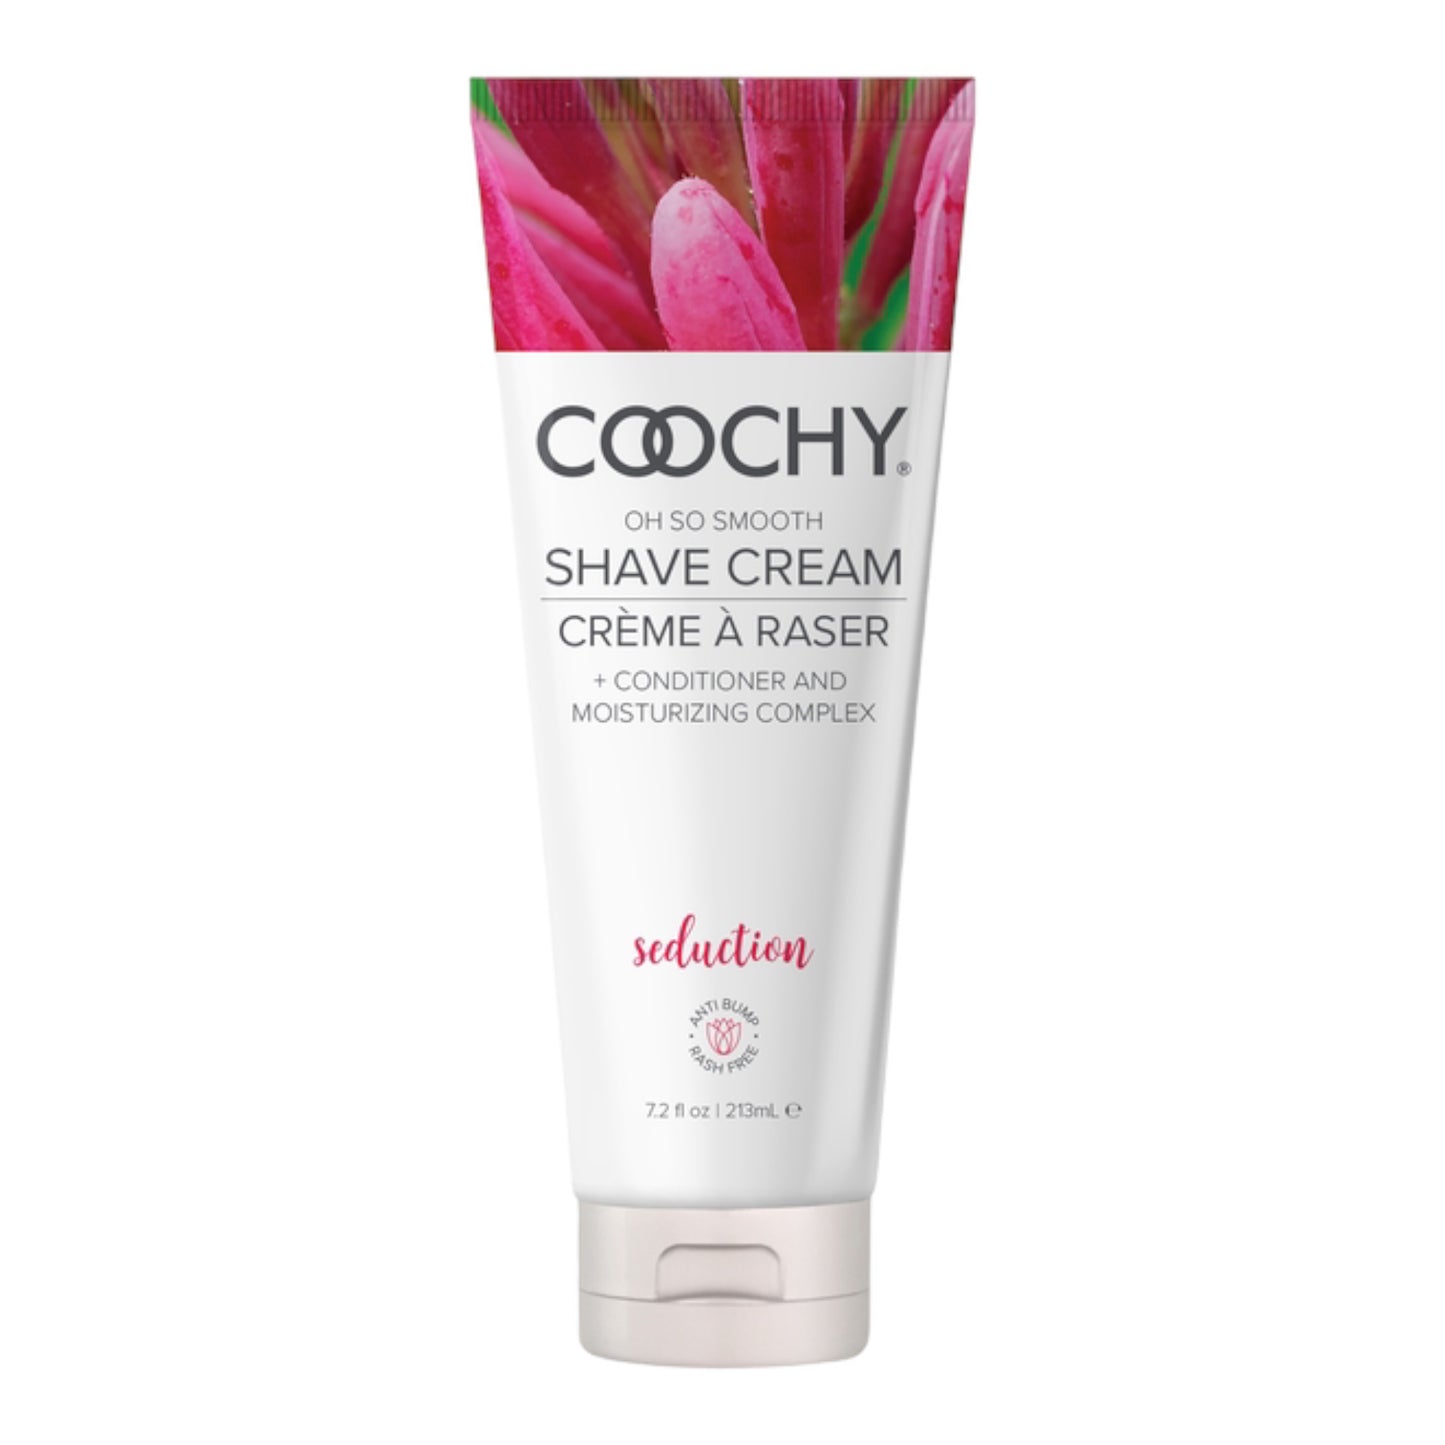 Coochy® Shave Cream